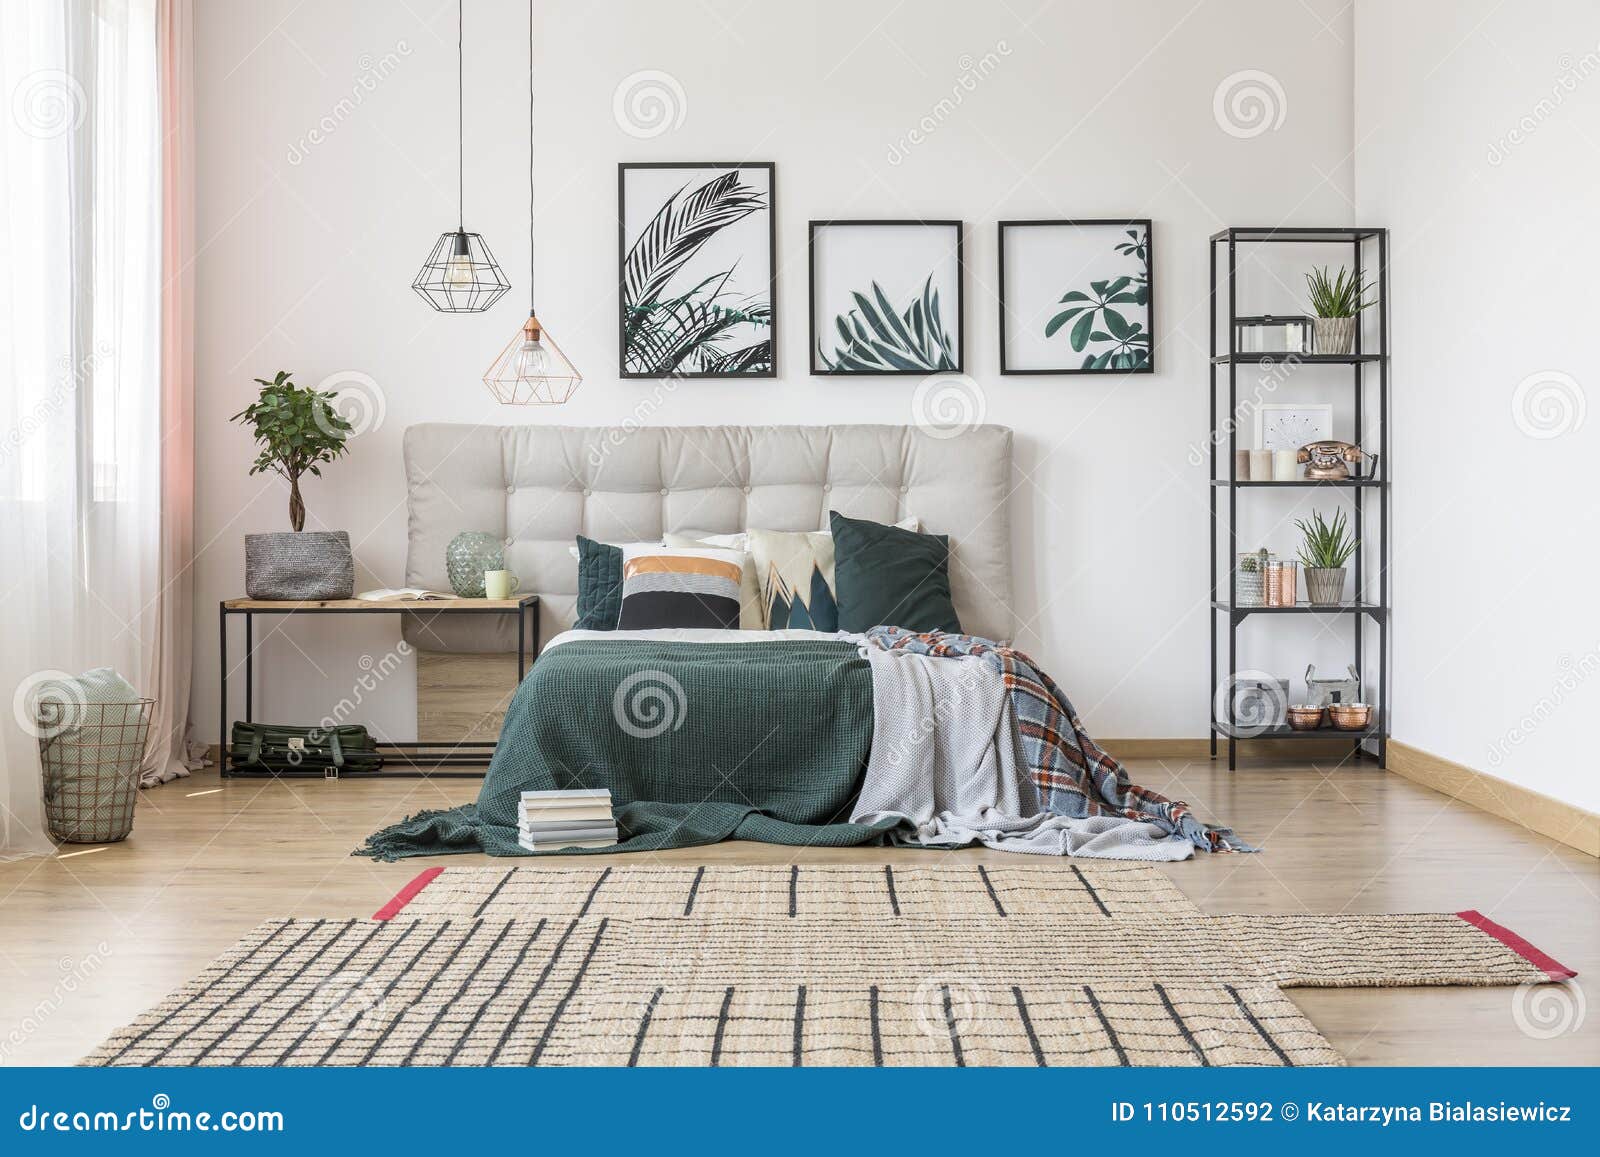 asymmetrical carpet in bedroom